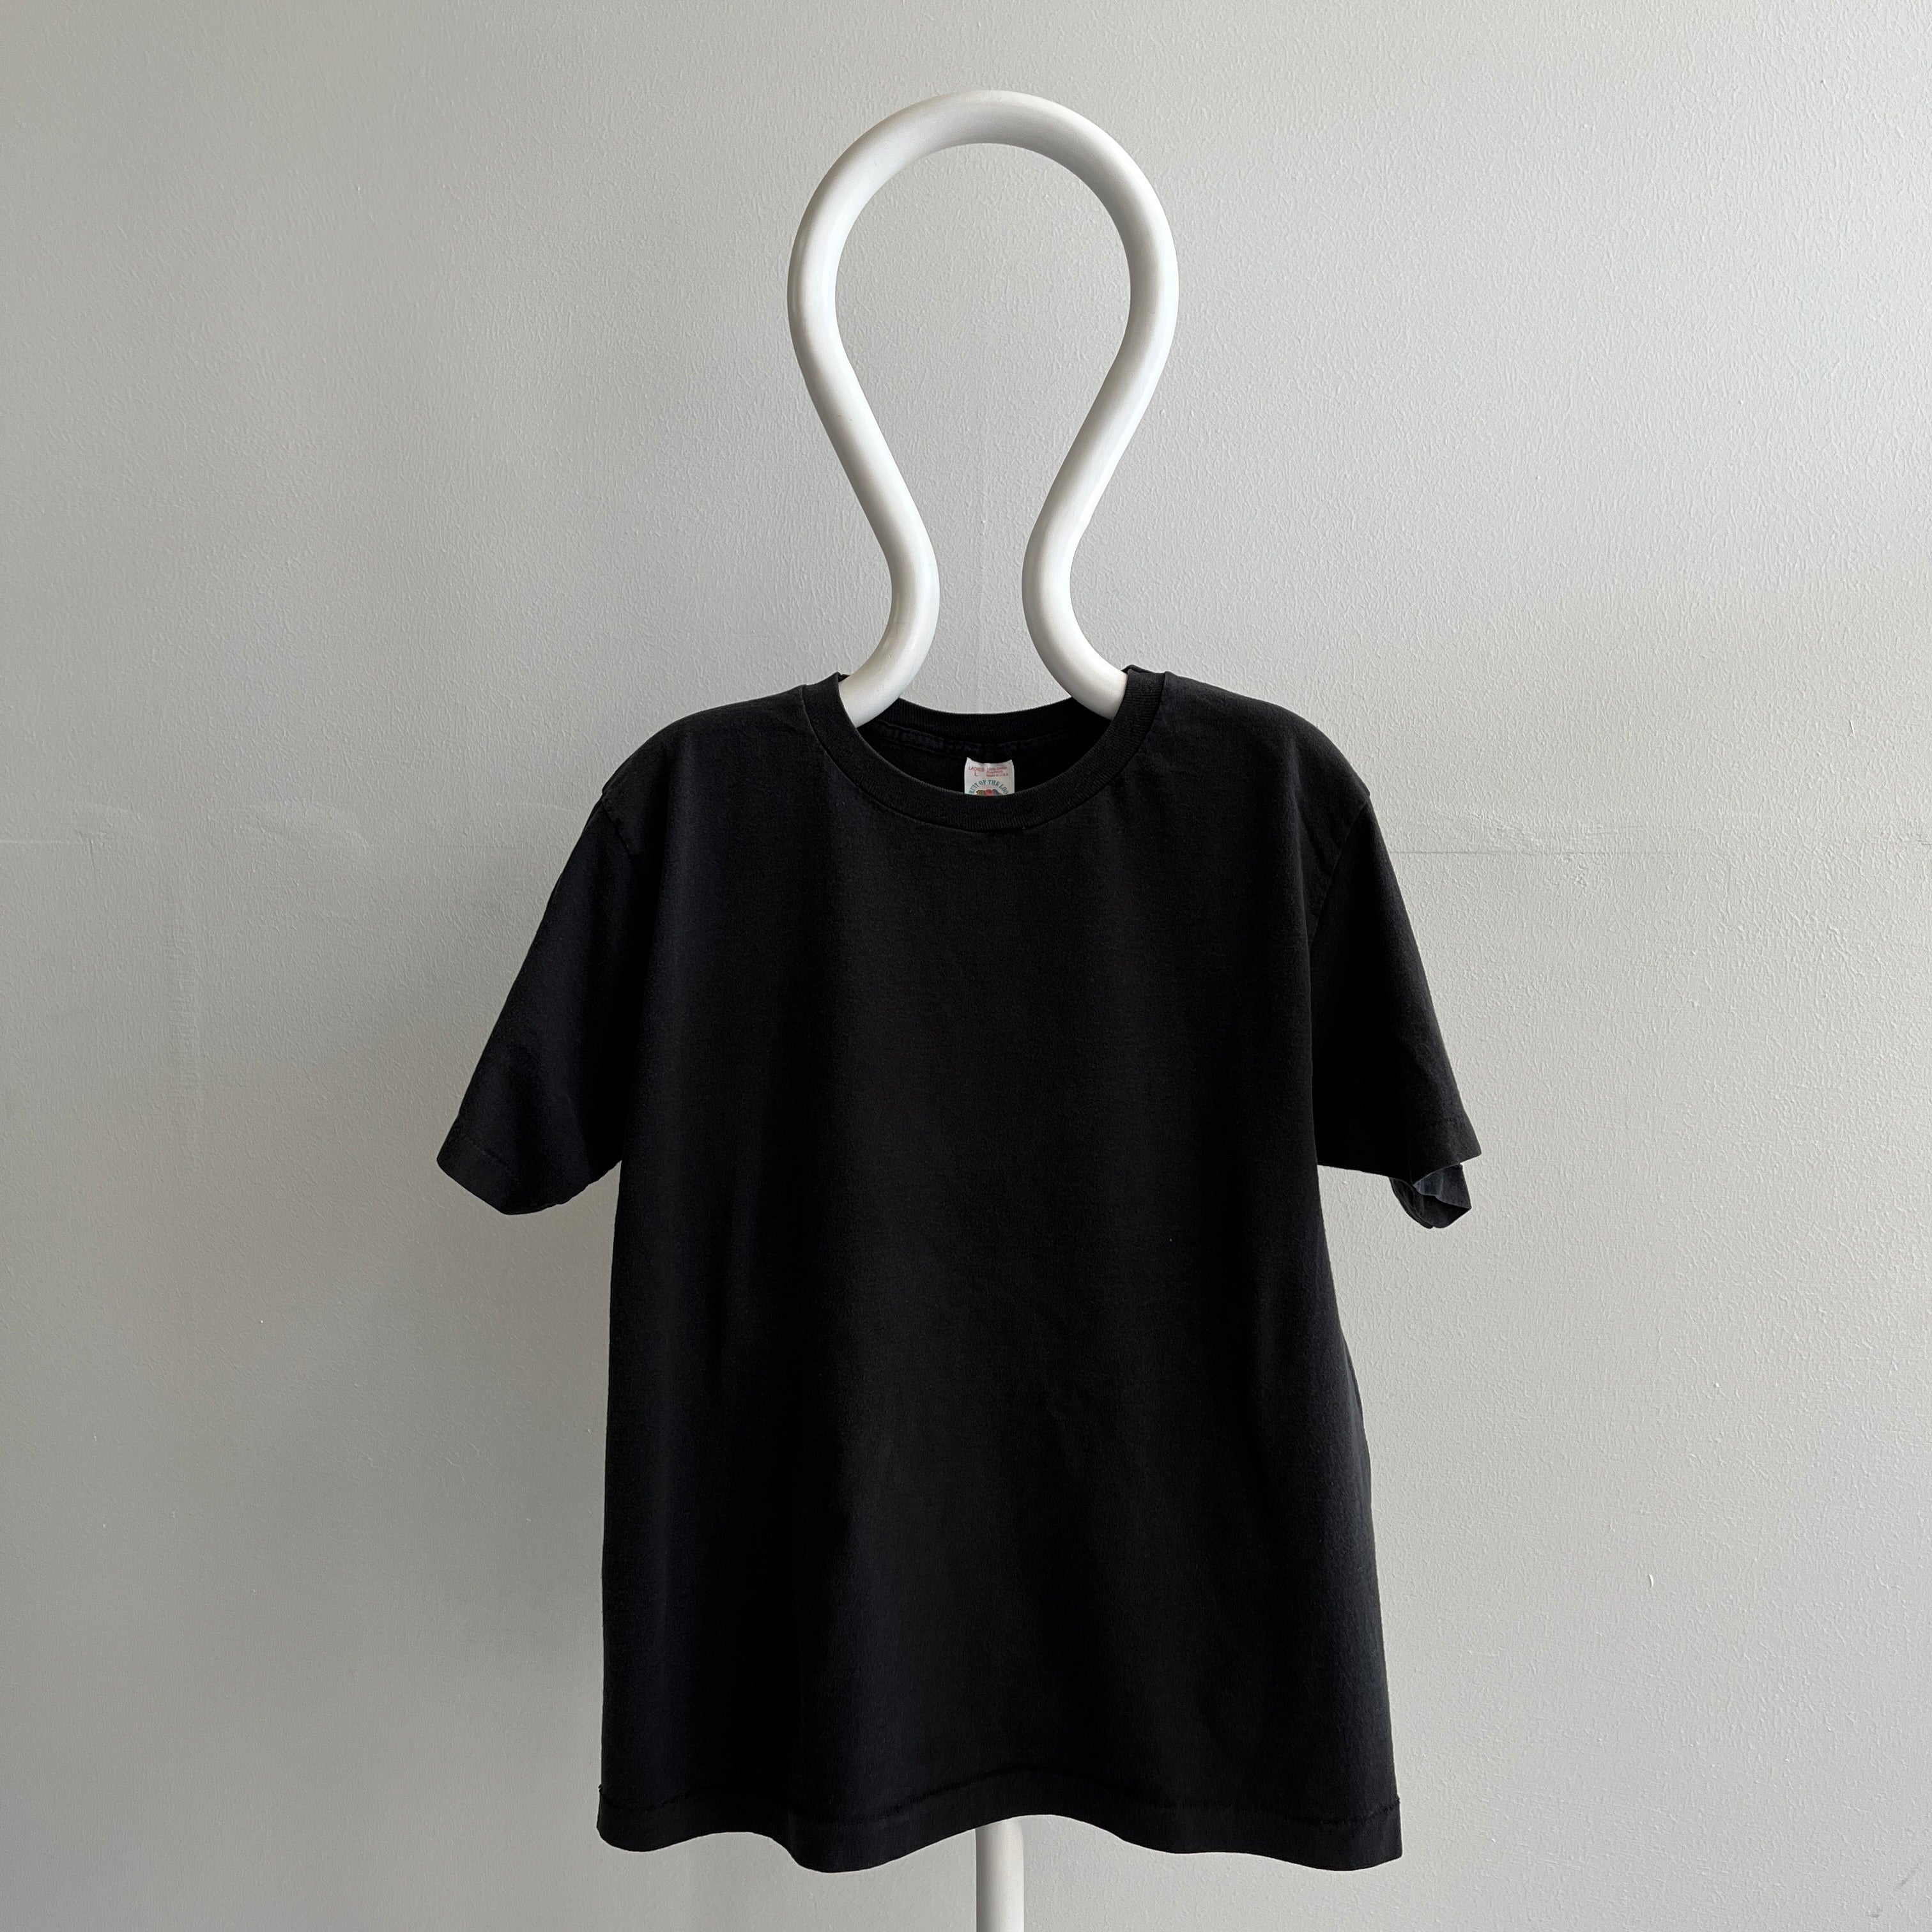 1980s FOTL Ladies Blank Black Cotton T-Shirt